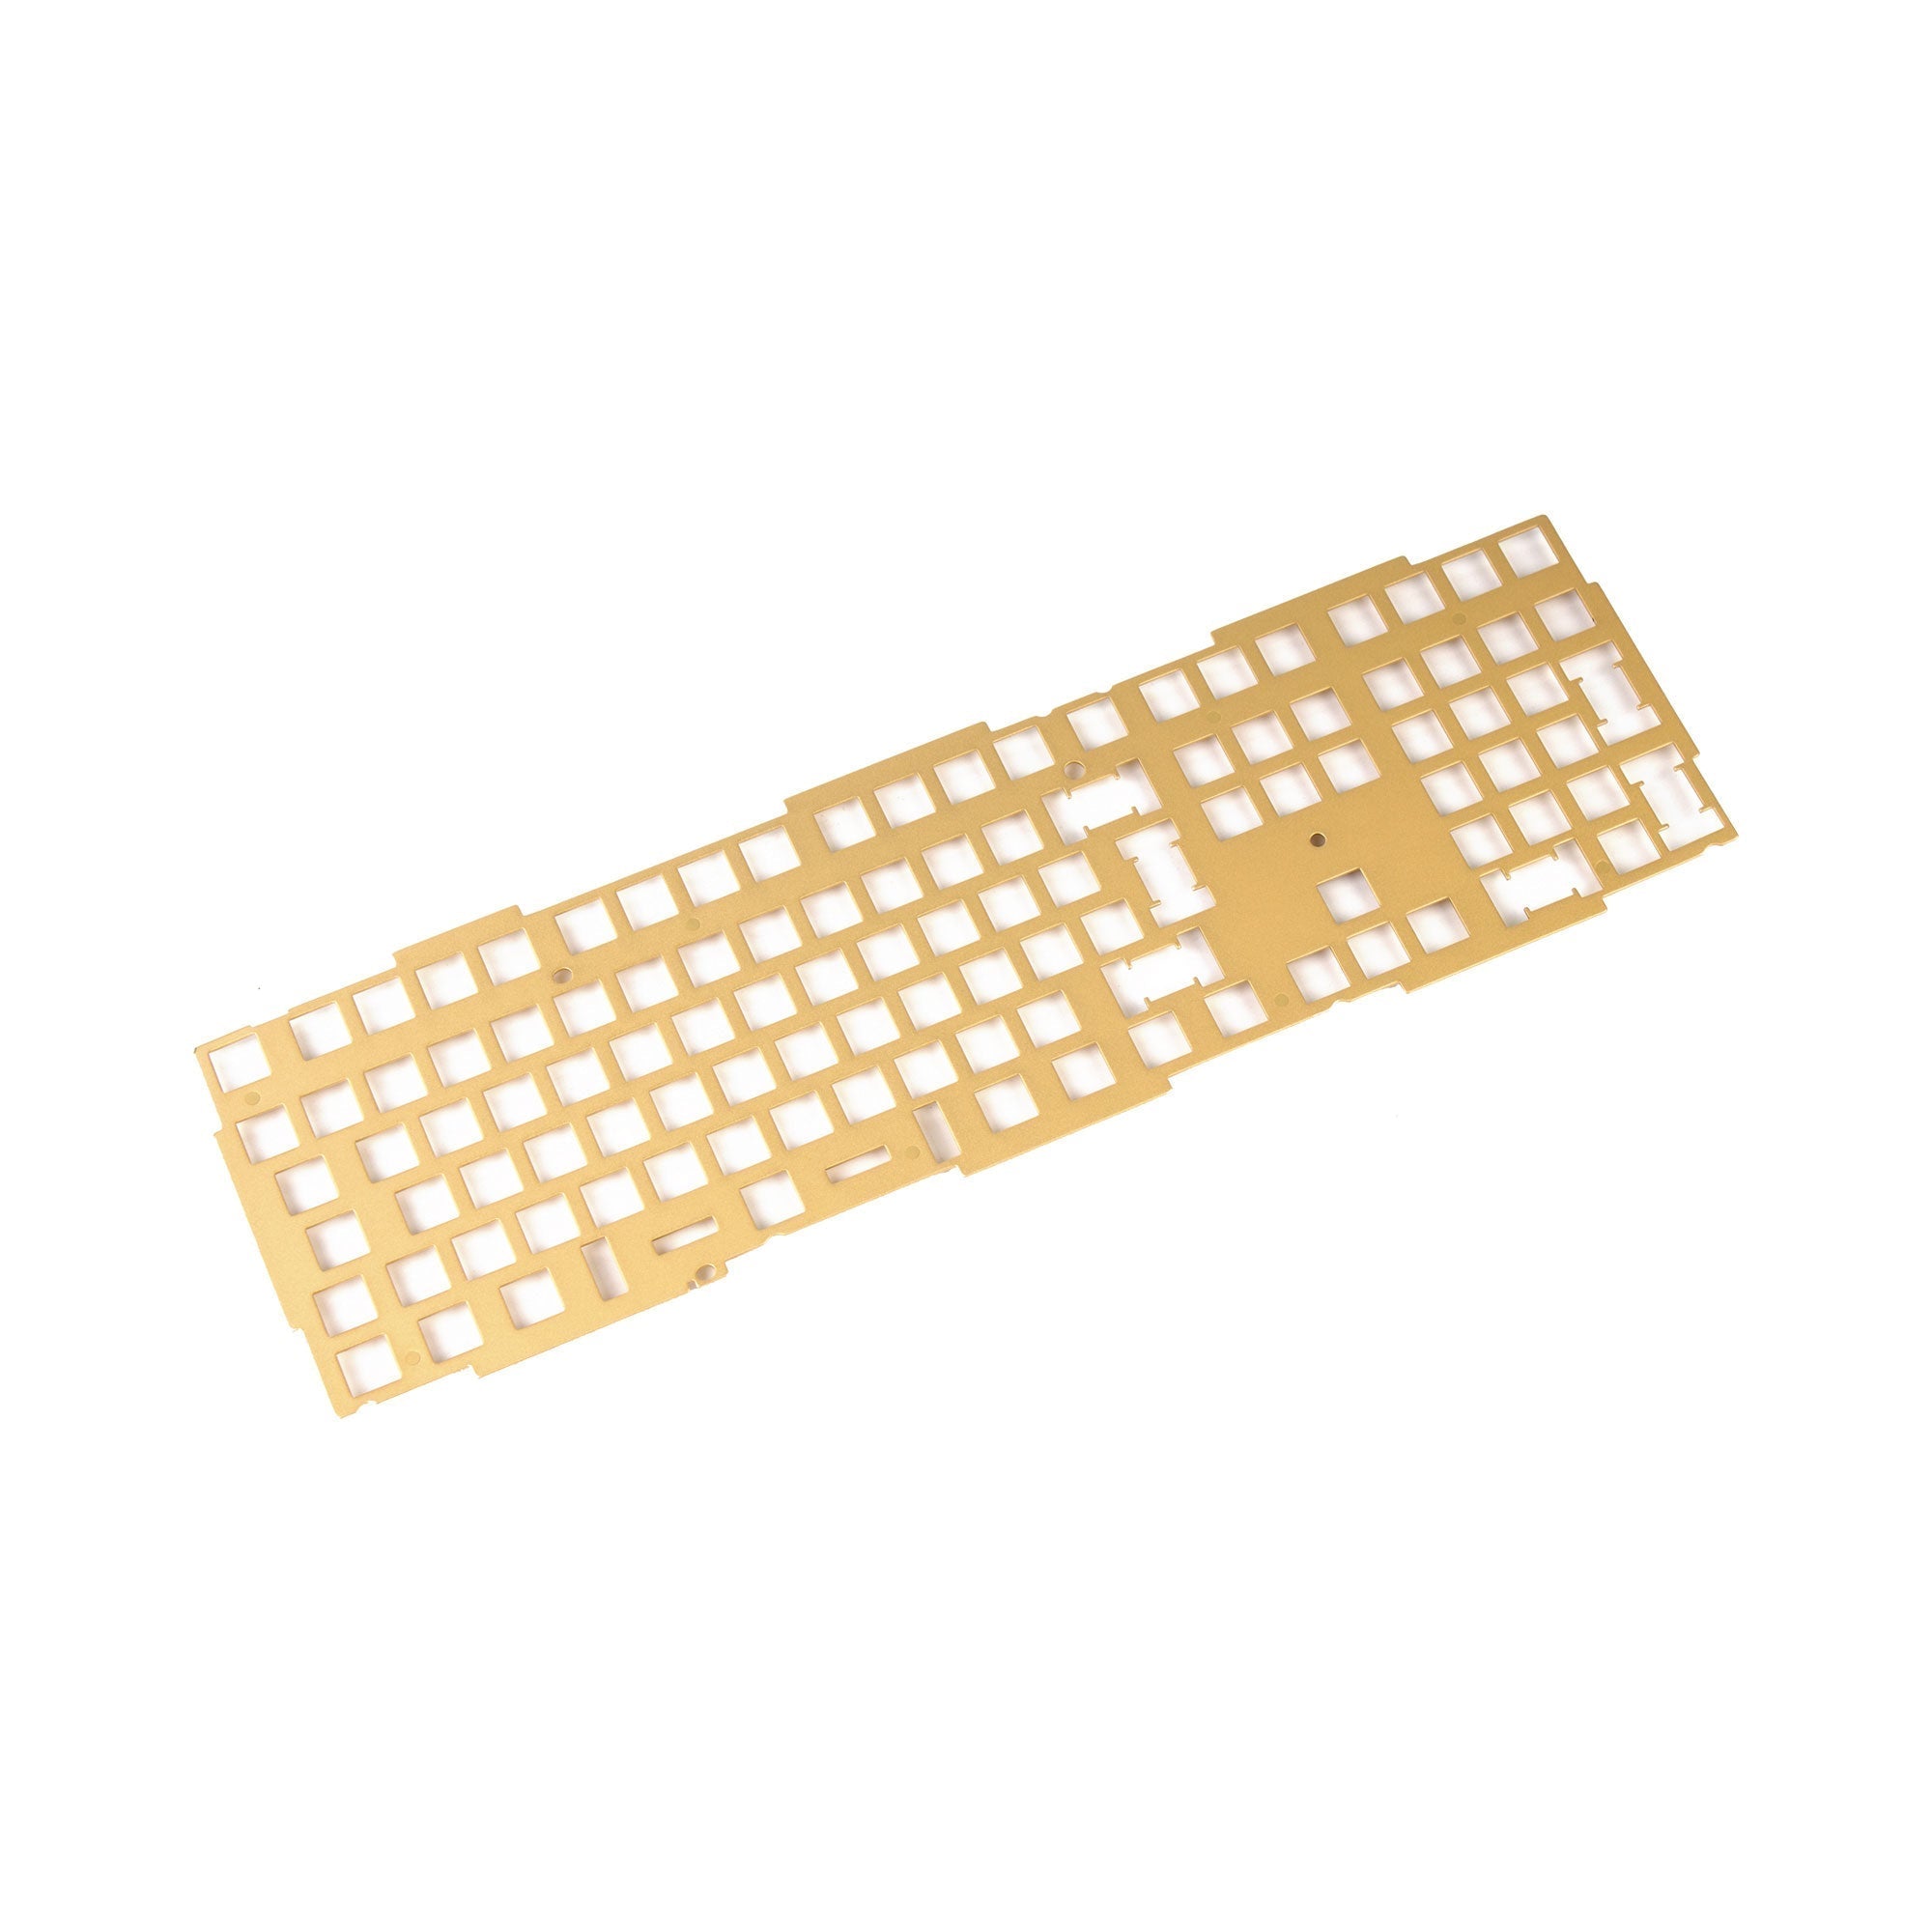 Keychron Q6 Keyboard Brass Plate Knob Version ISO Layout